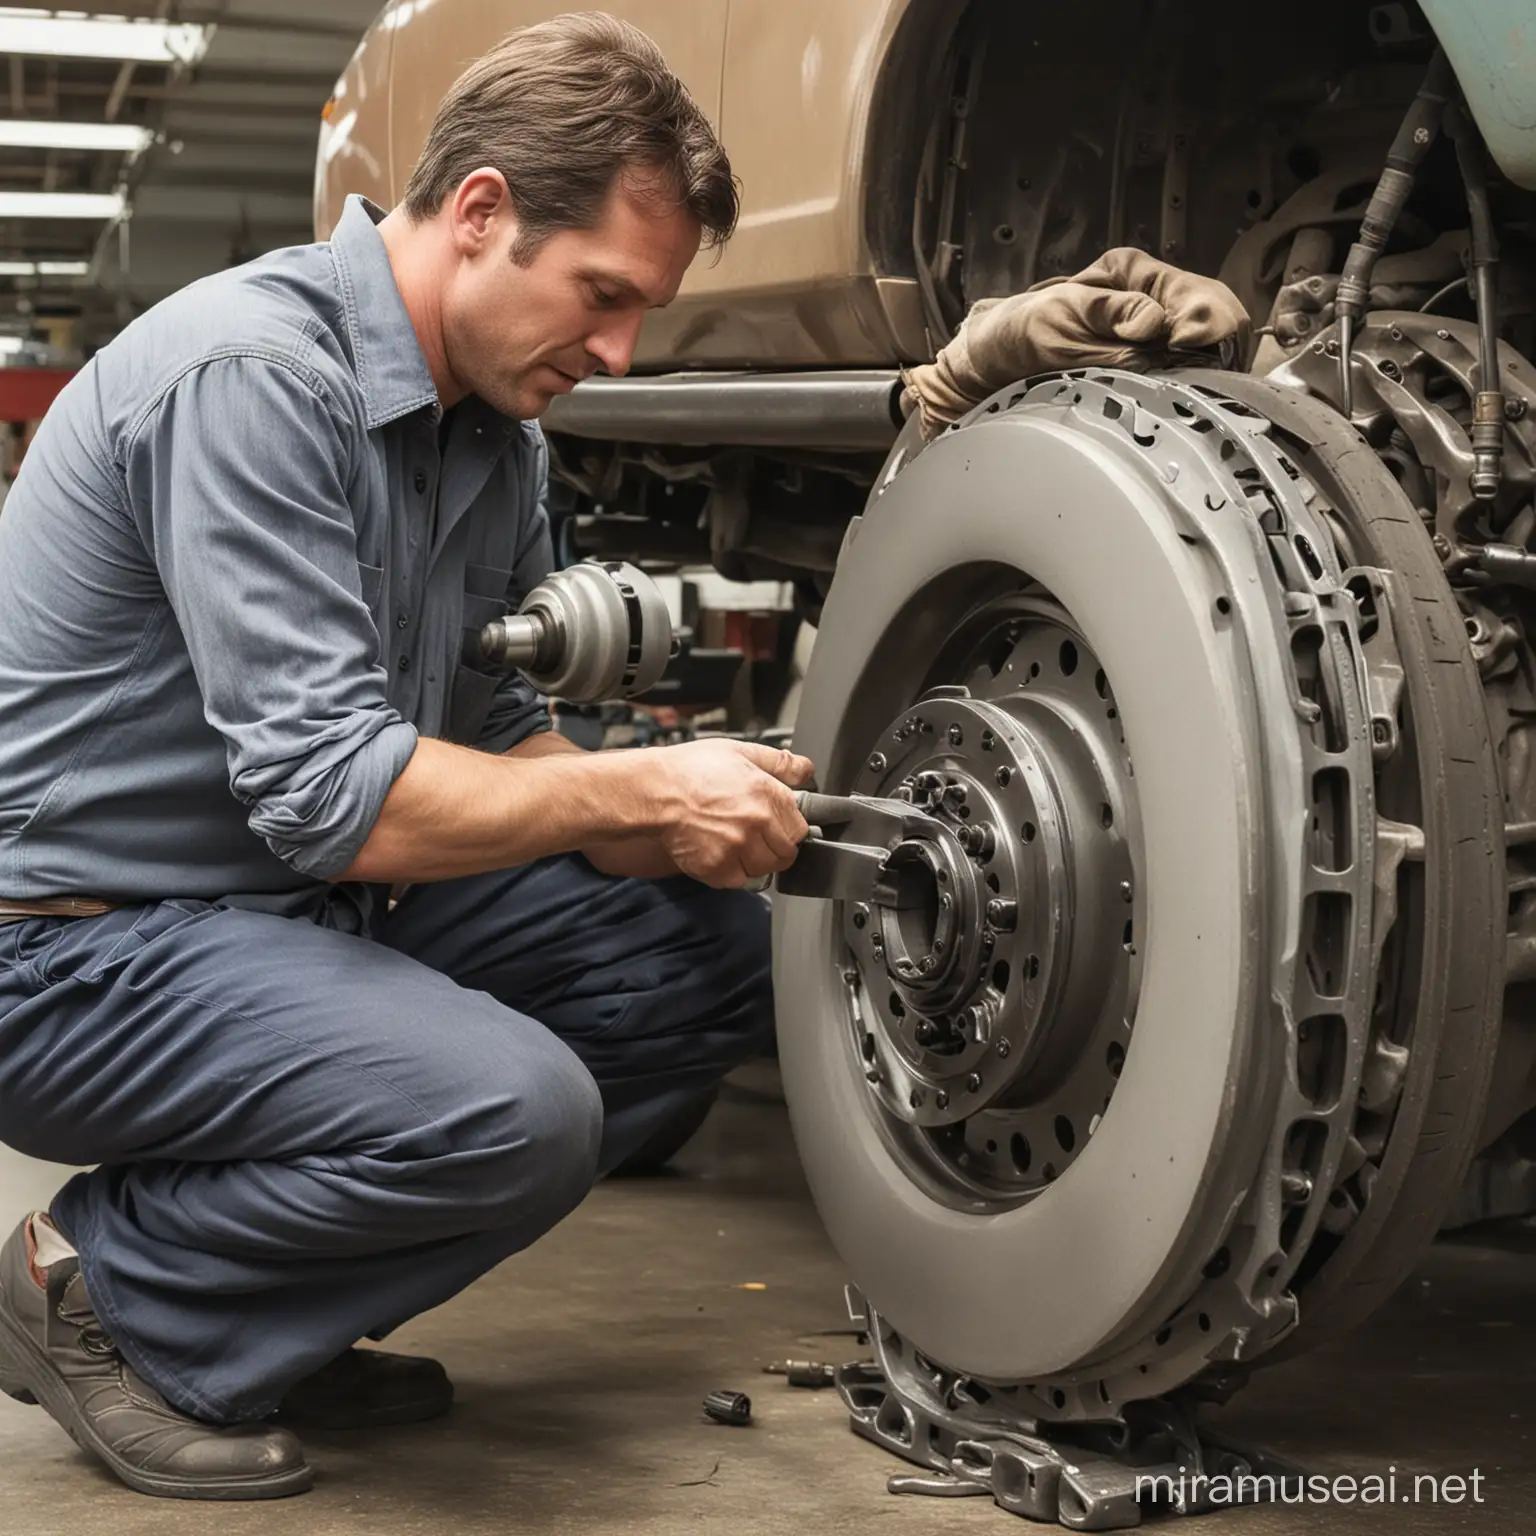 American Mechanic Installing Brake Discs on a Car